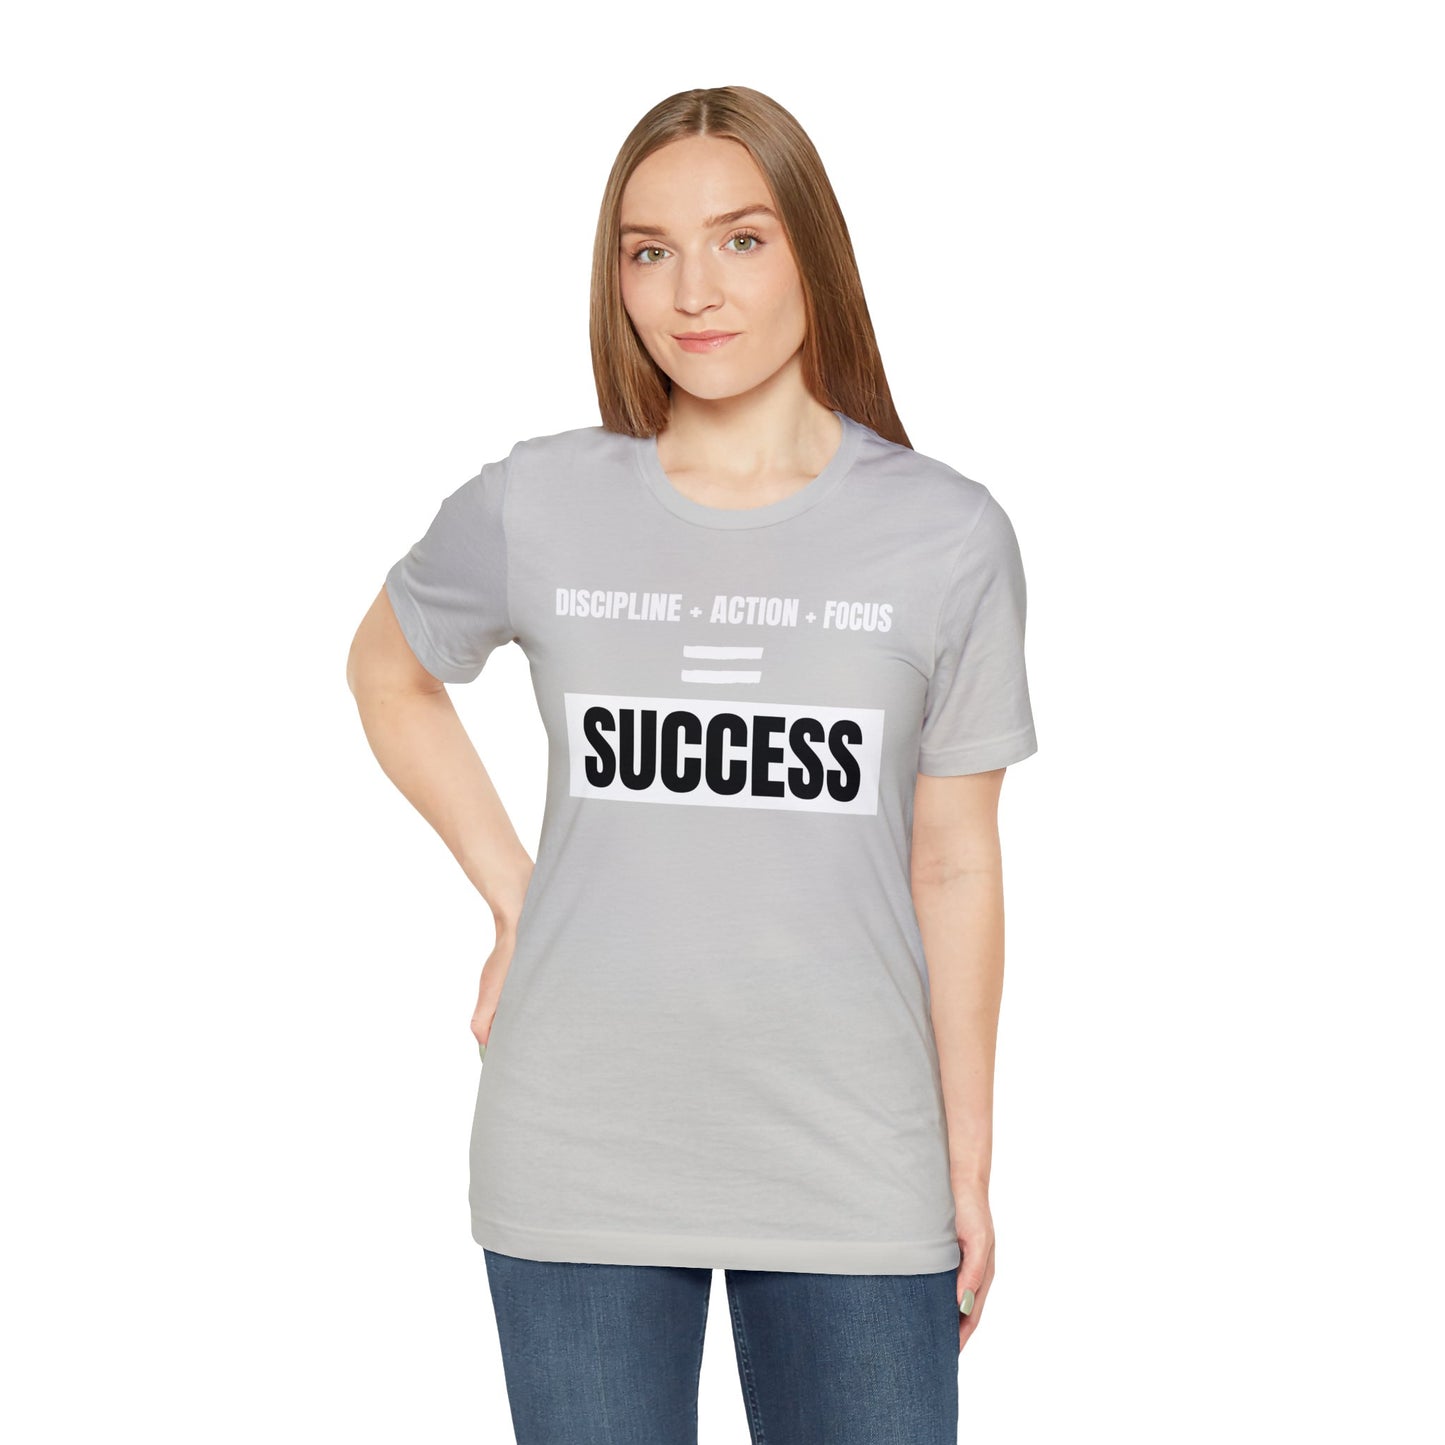 DISCIPLINE + ACTION + FOCUS = SUCCESS Unisex Jersey Short Sleeve Tee